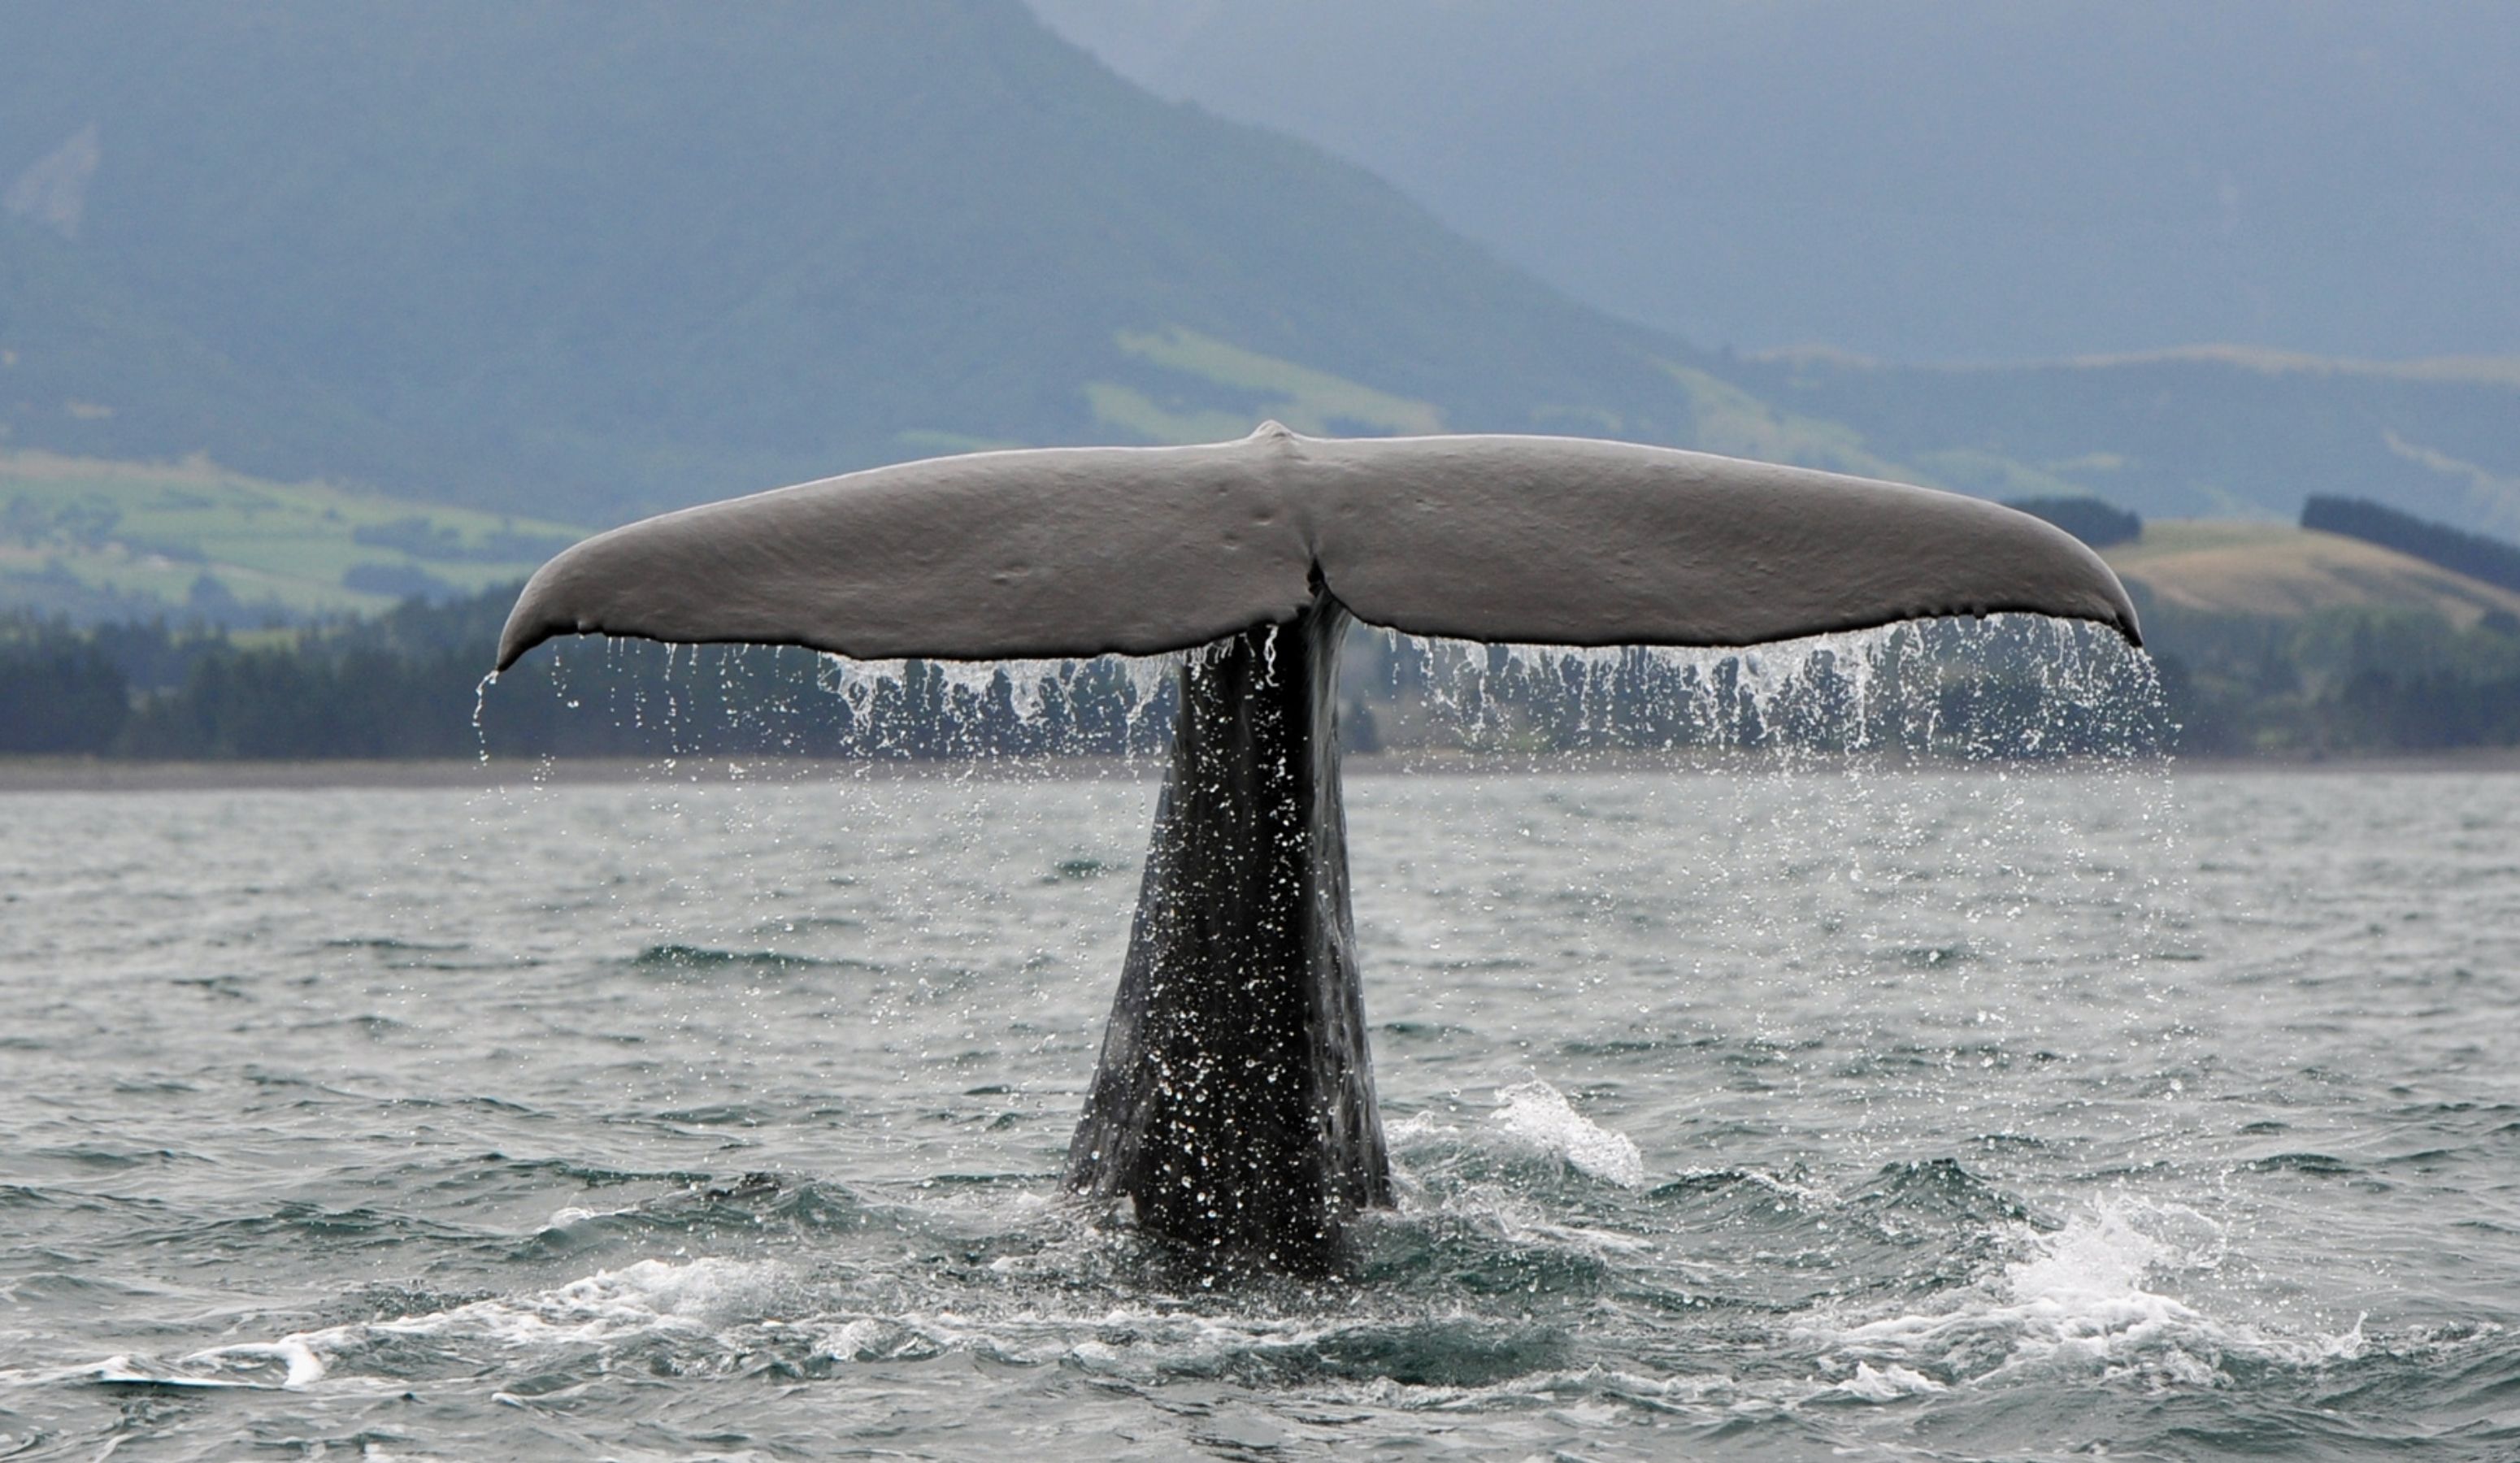 Sperm whale experience iceland tail.jpg